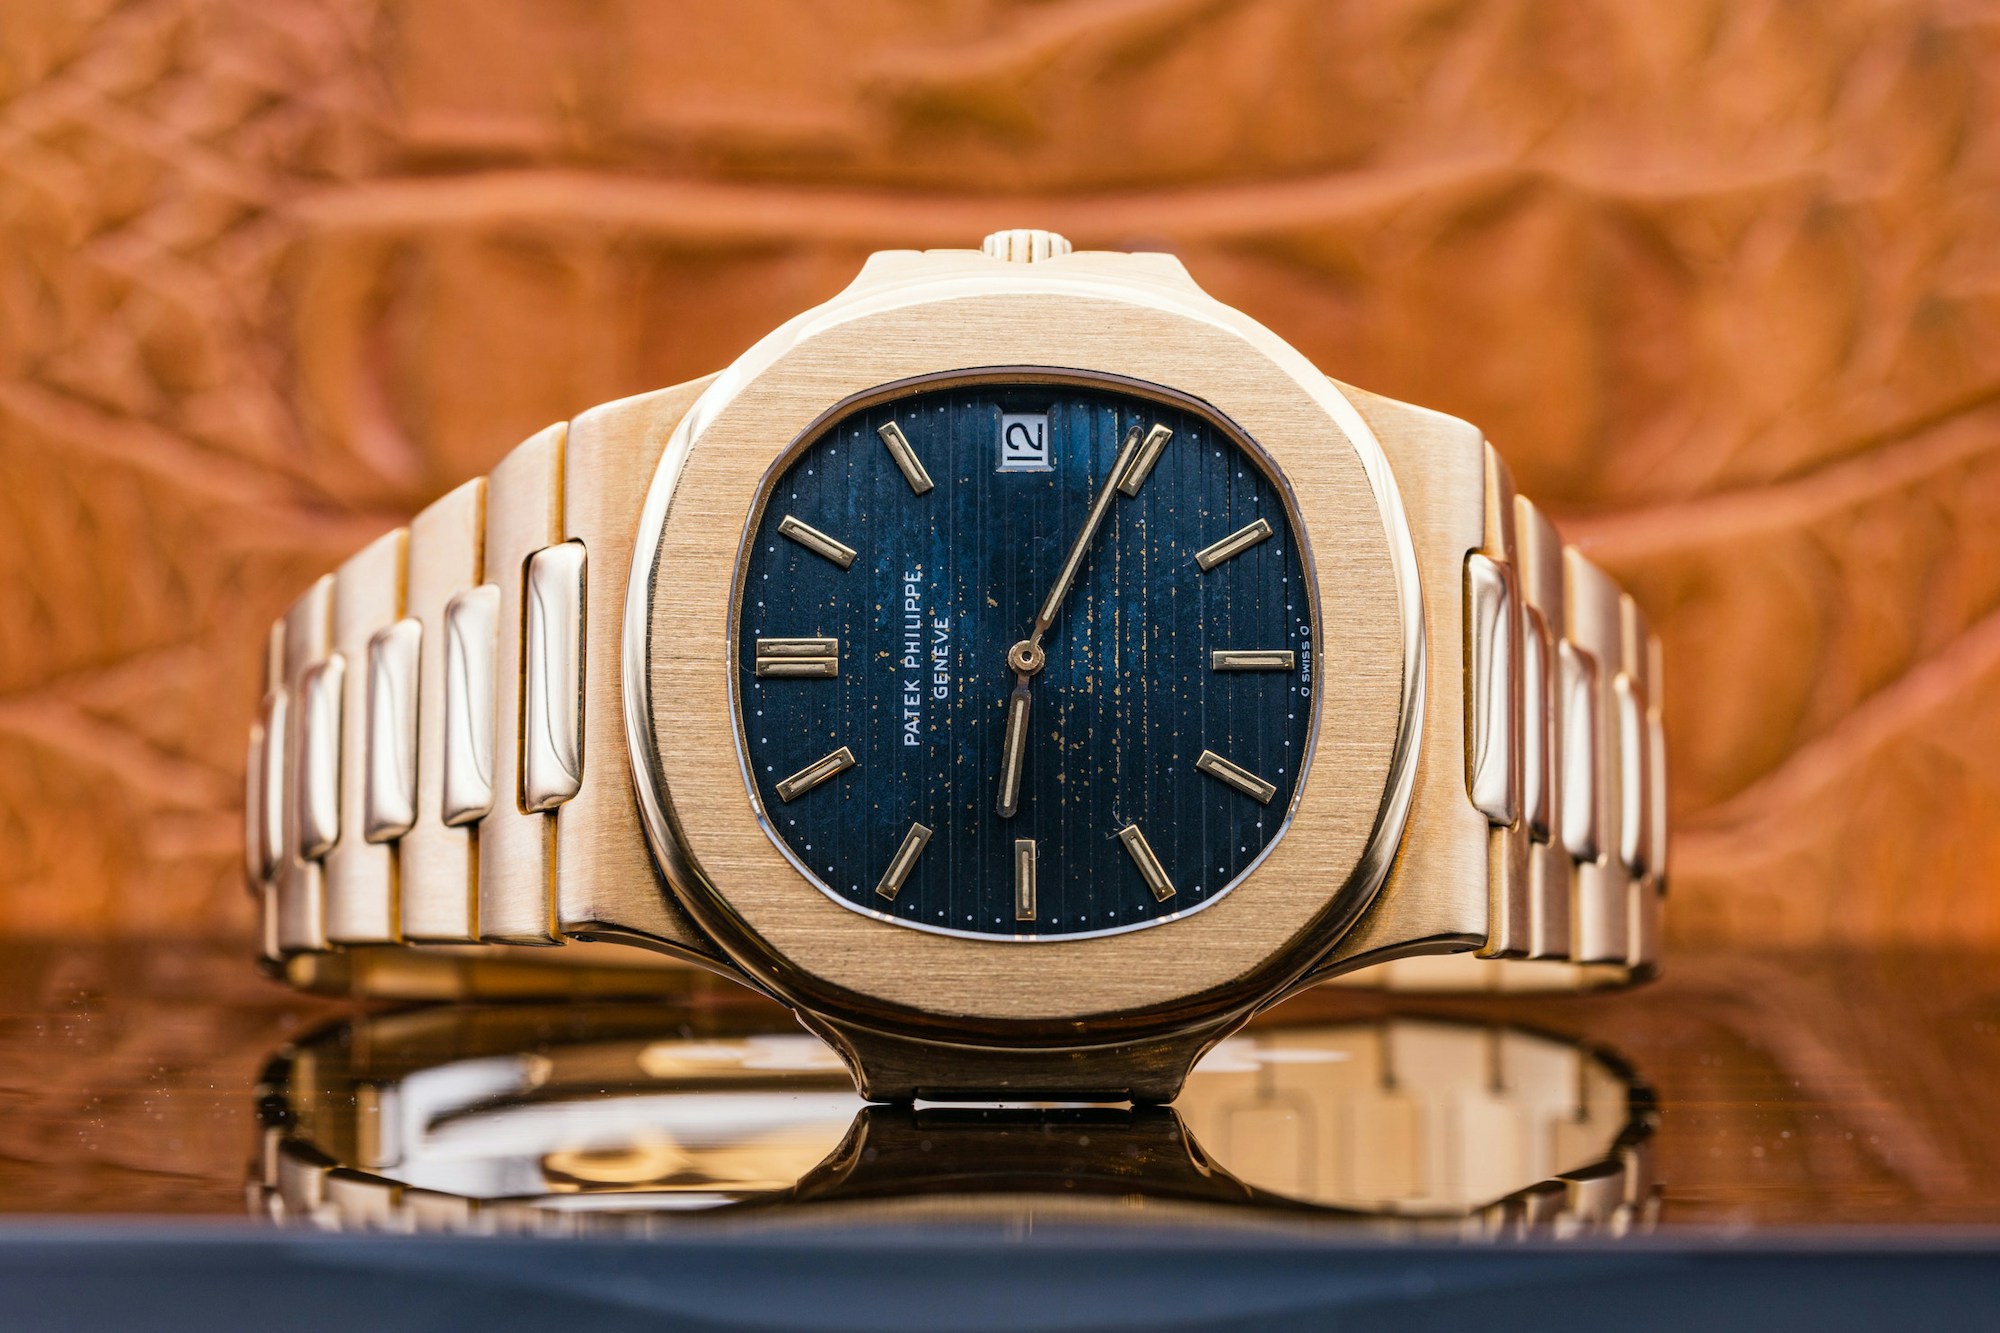 PATEK PHILIPPE ROSE GOLD NAUTILUS MODEL 5711R/1R-001 - Carr Watches